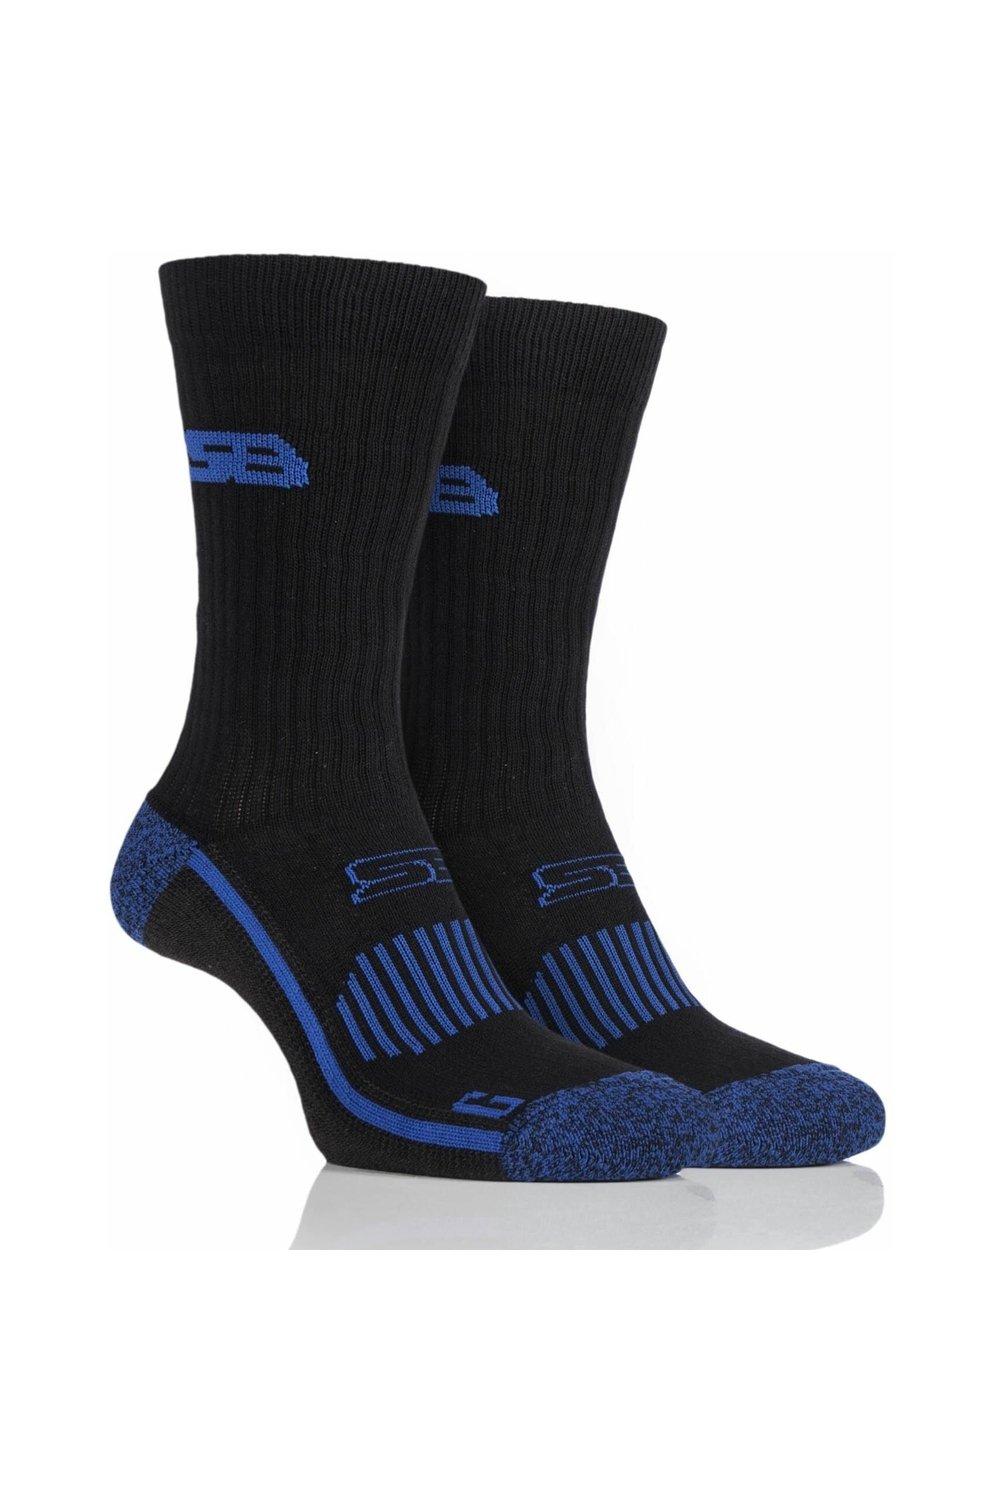 2 Pair with BlueGuard Sports Crew Socks